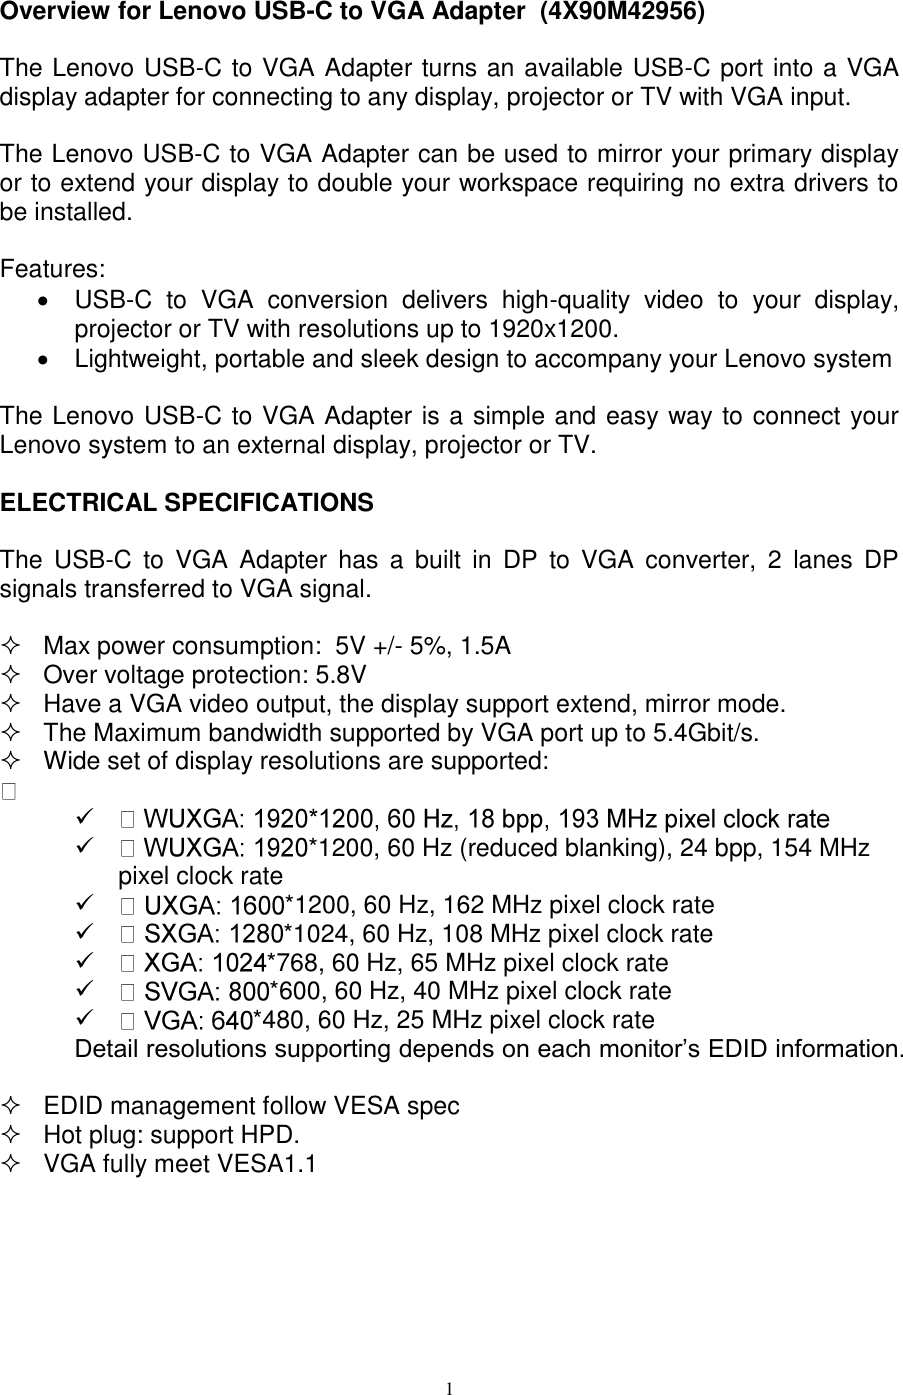 Page 1 of 2 - Lenovo Usbc To Vga Adapter 4X90M42956 User Manual Yoga Laptop (Think Pad) - Type 20CD